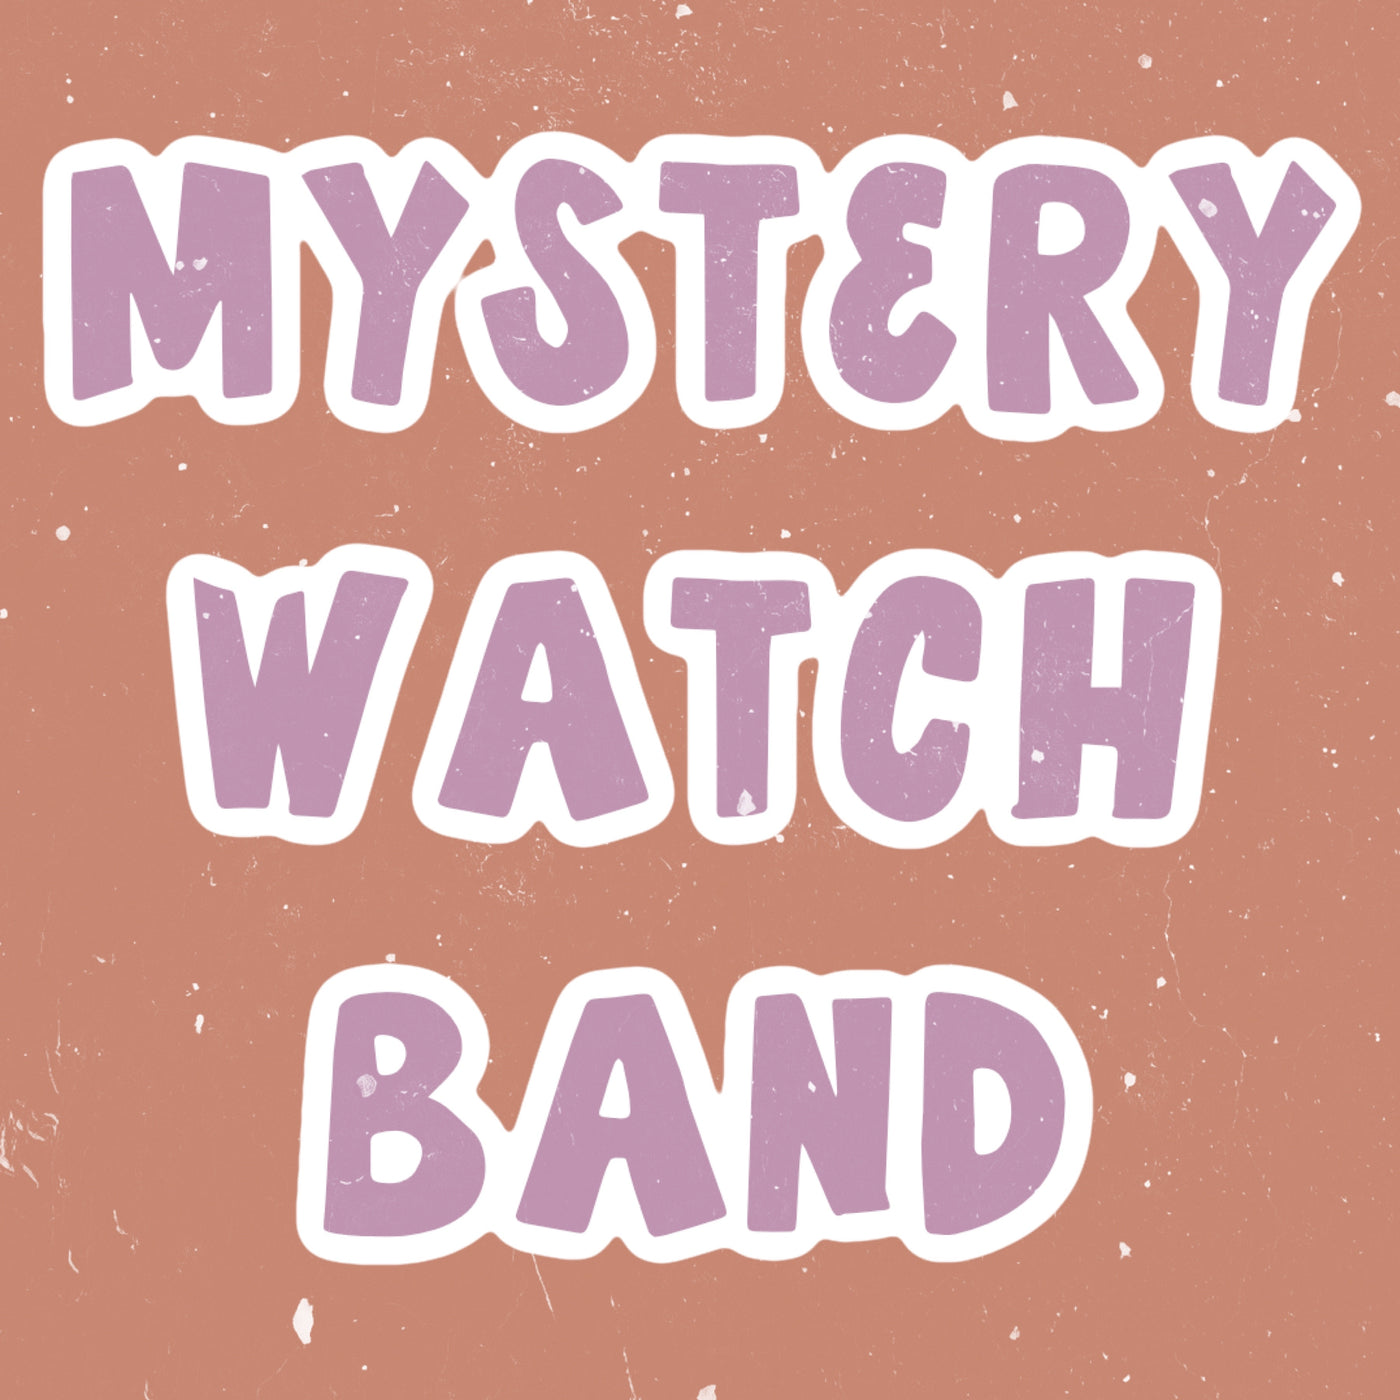 Mystery Watch band